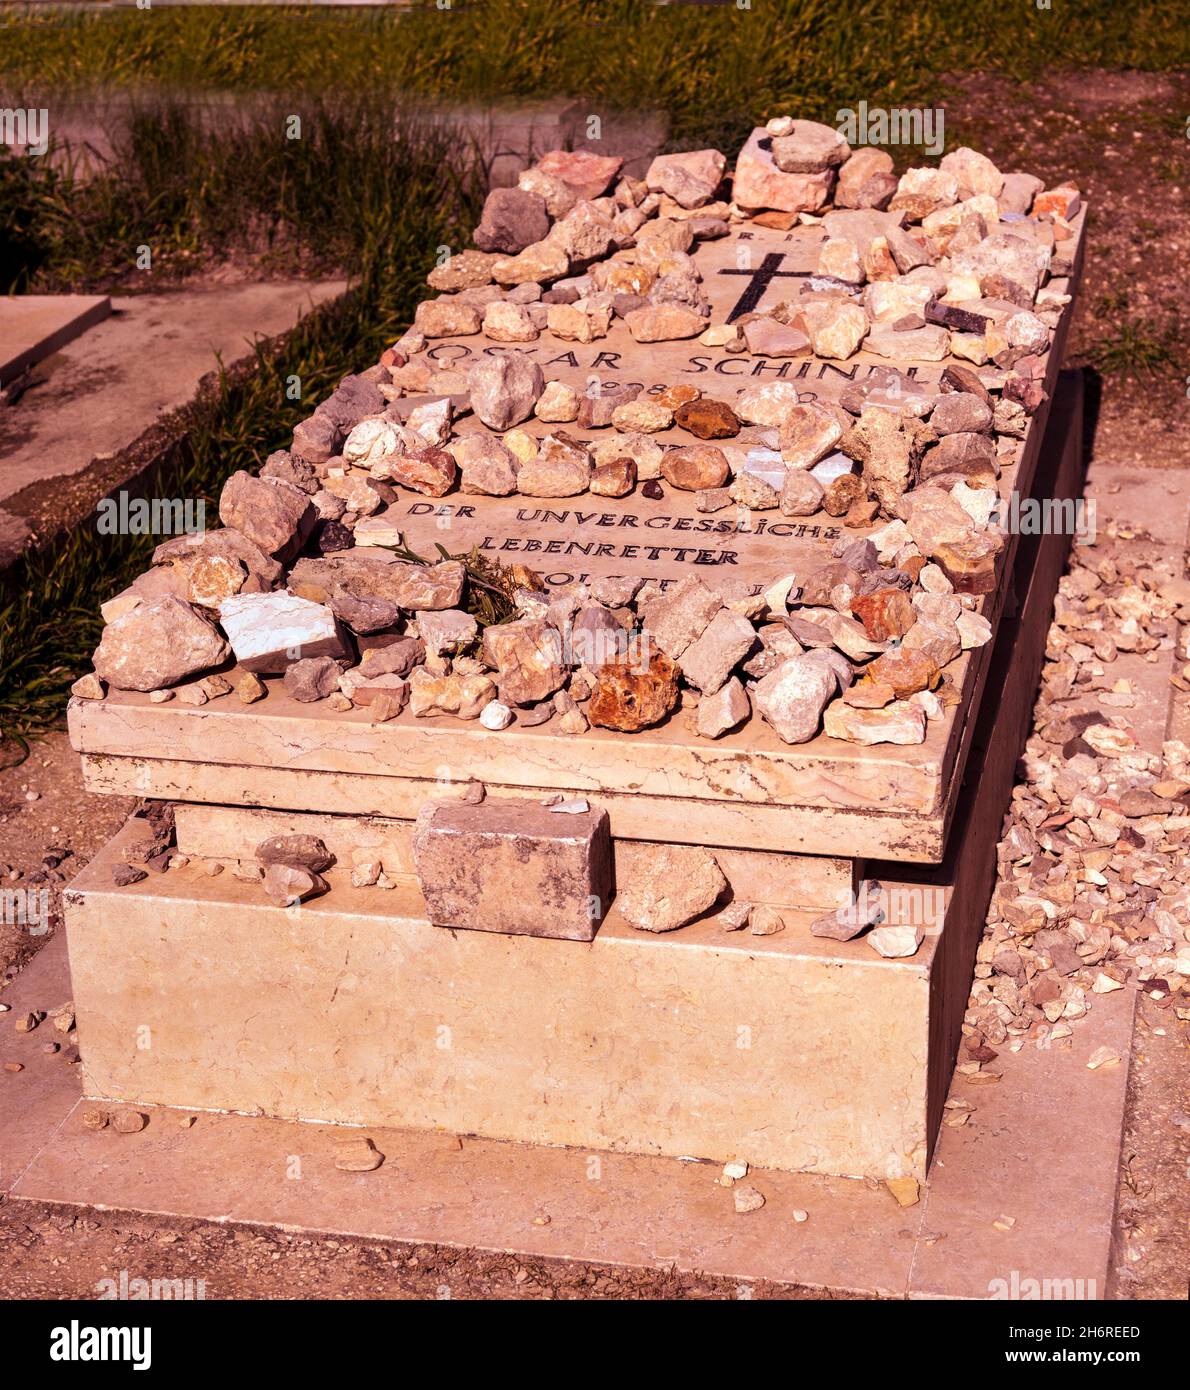 World War ll, Oskar Schindler grave on Mount Zion, 1974, He saved 1,200 Jews during World War II. The movie Schindler‘s List tells his story. Stock Photo